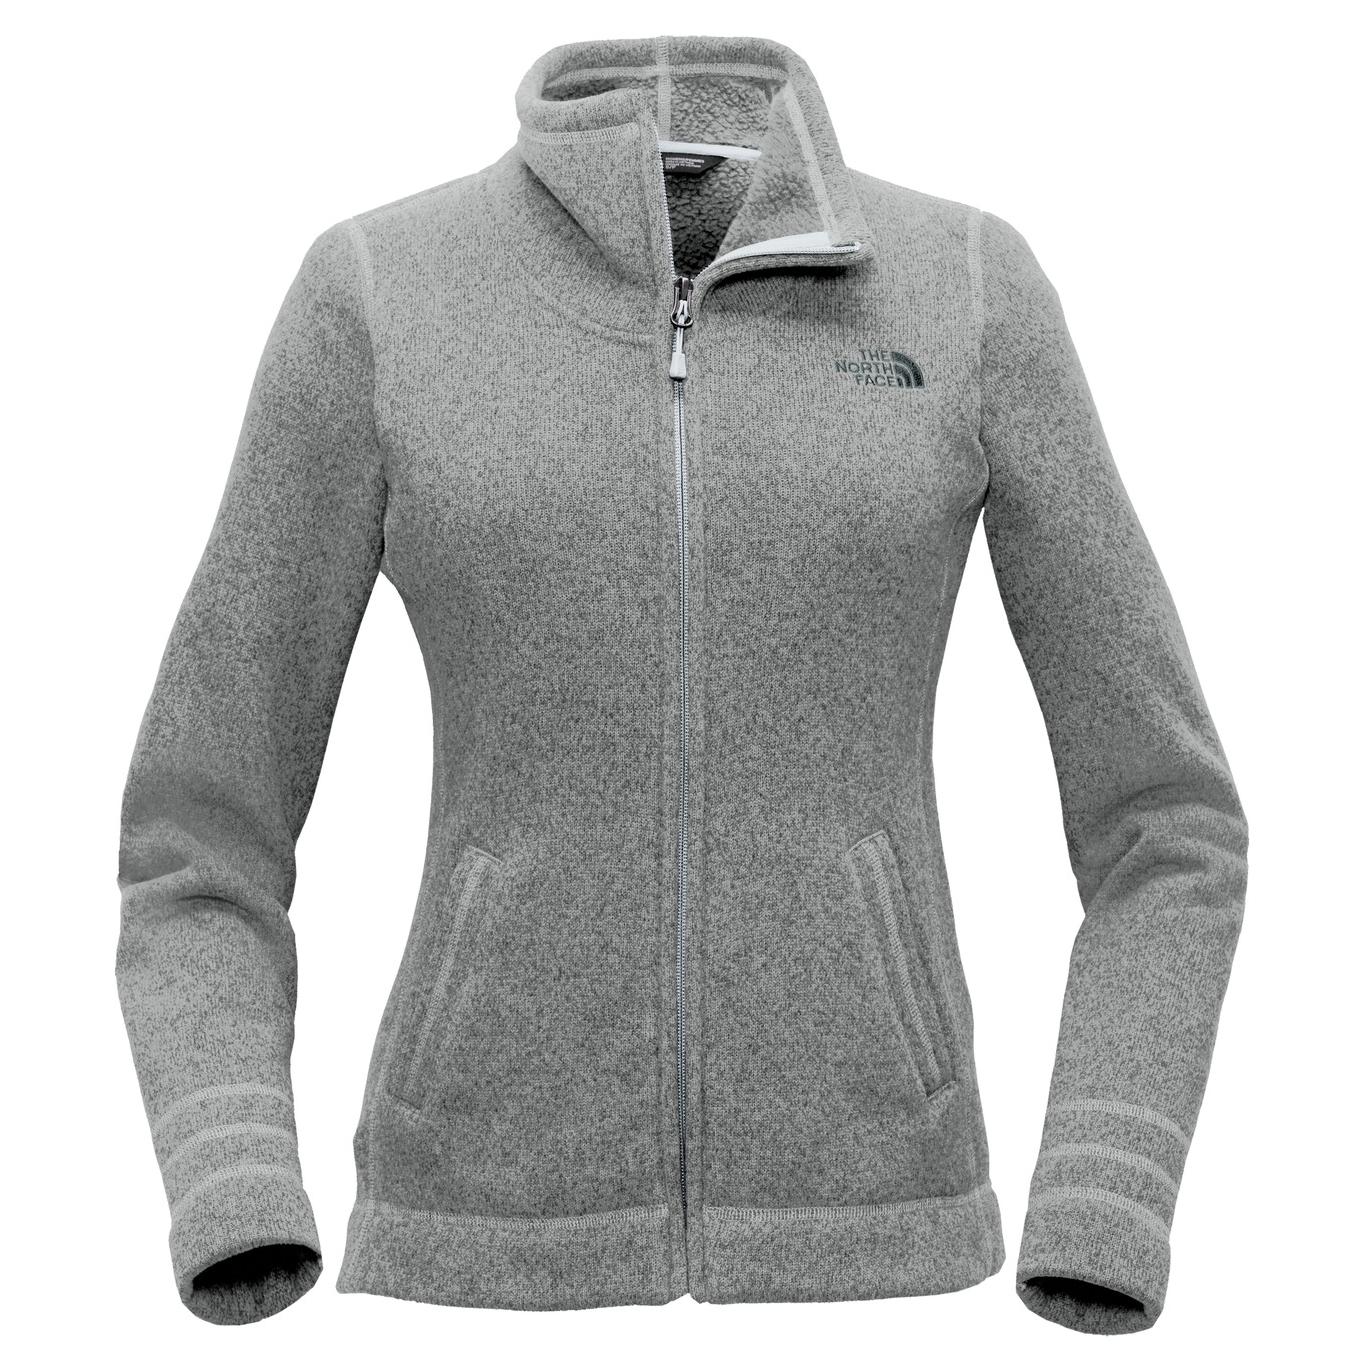 The North Face NF0A3LH8 Ladies Sweater Fleece Jacket - Medium Grey ...